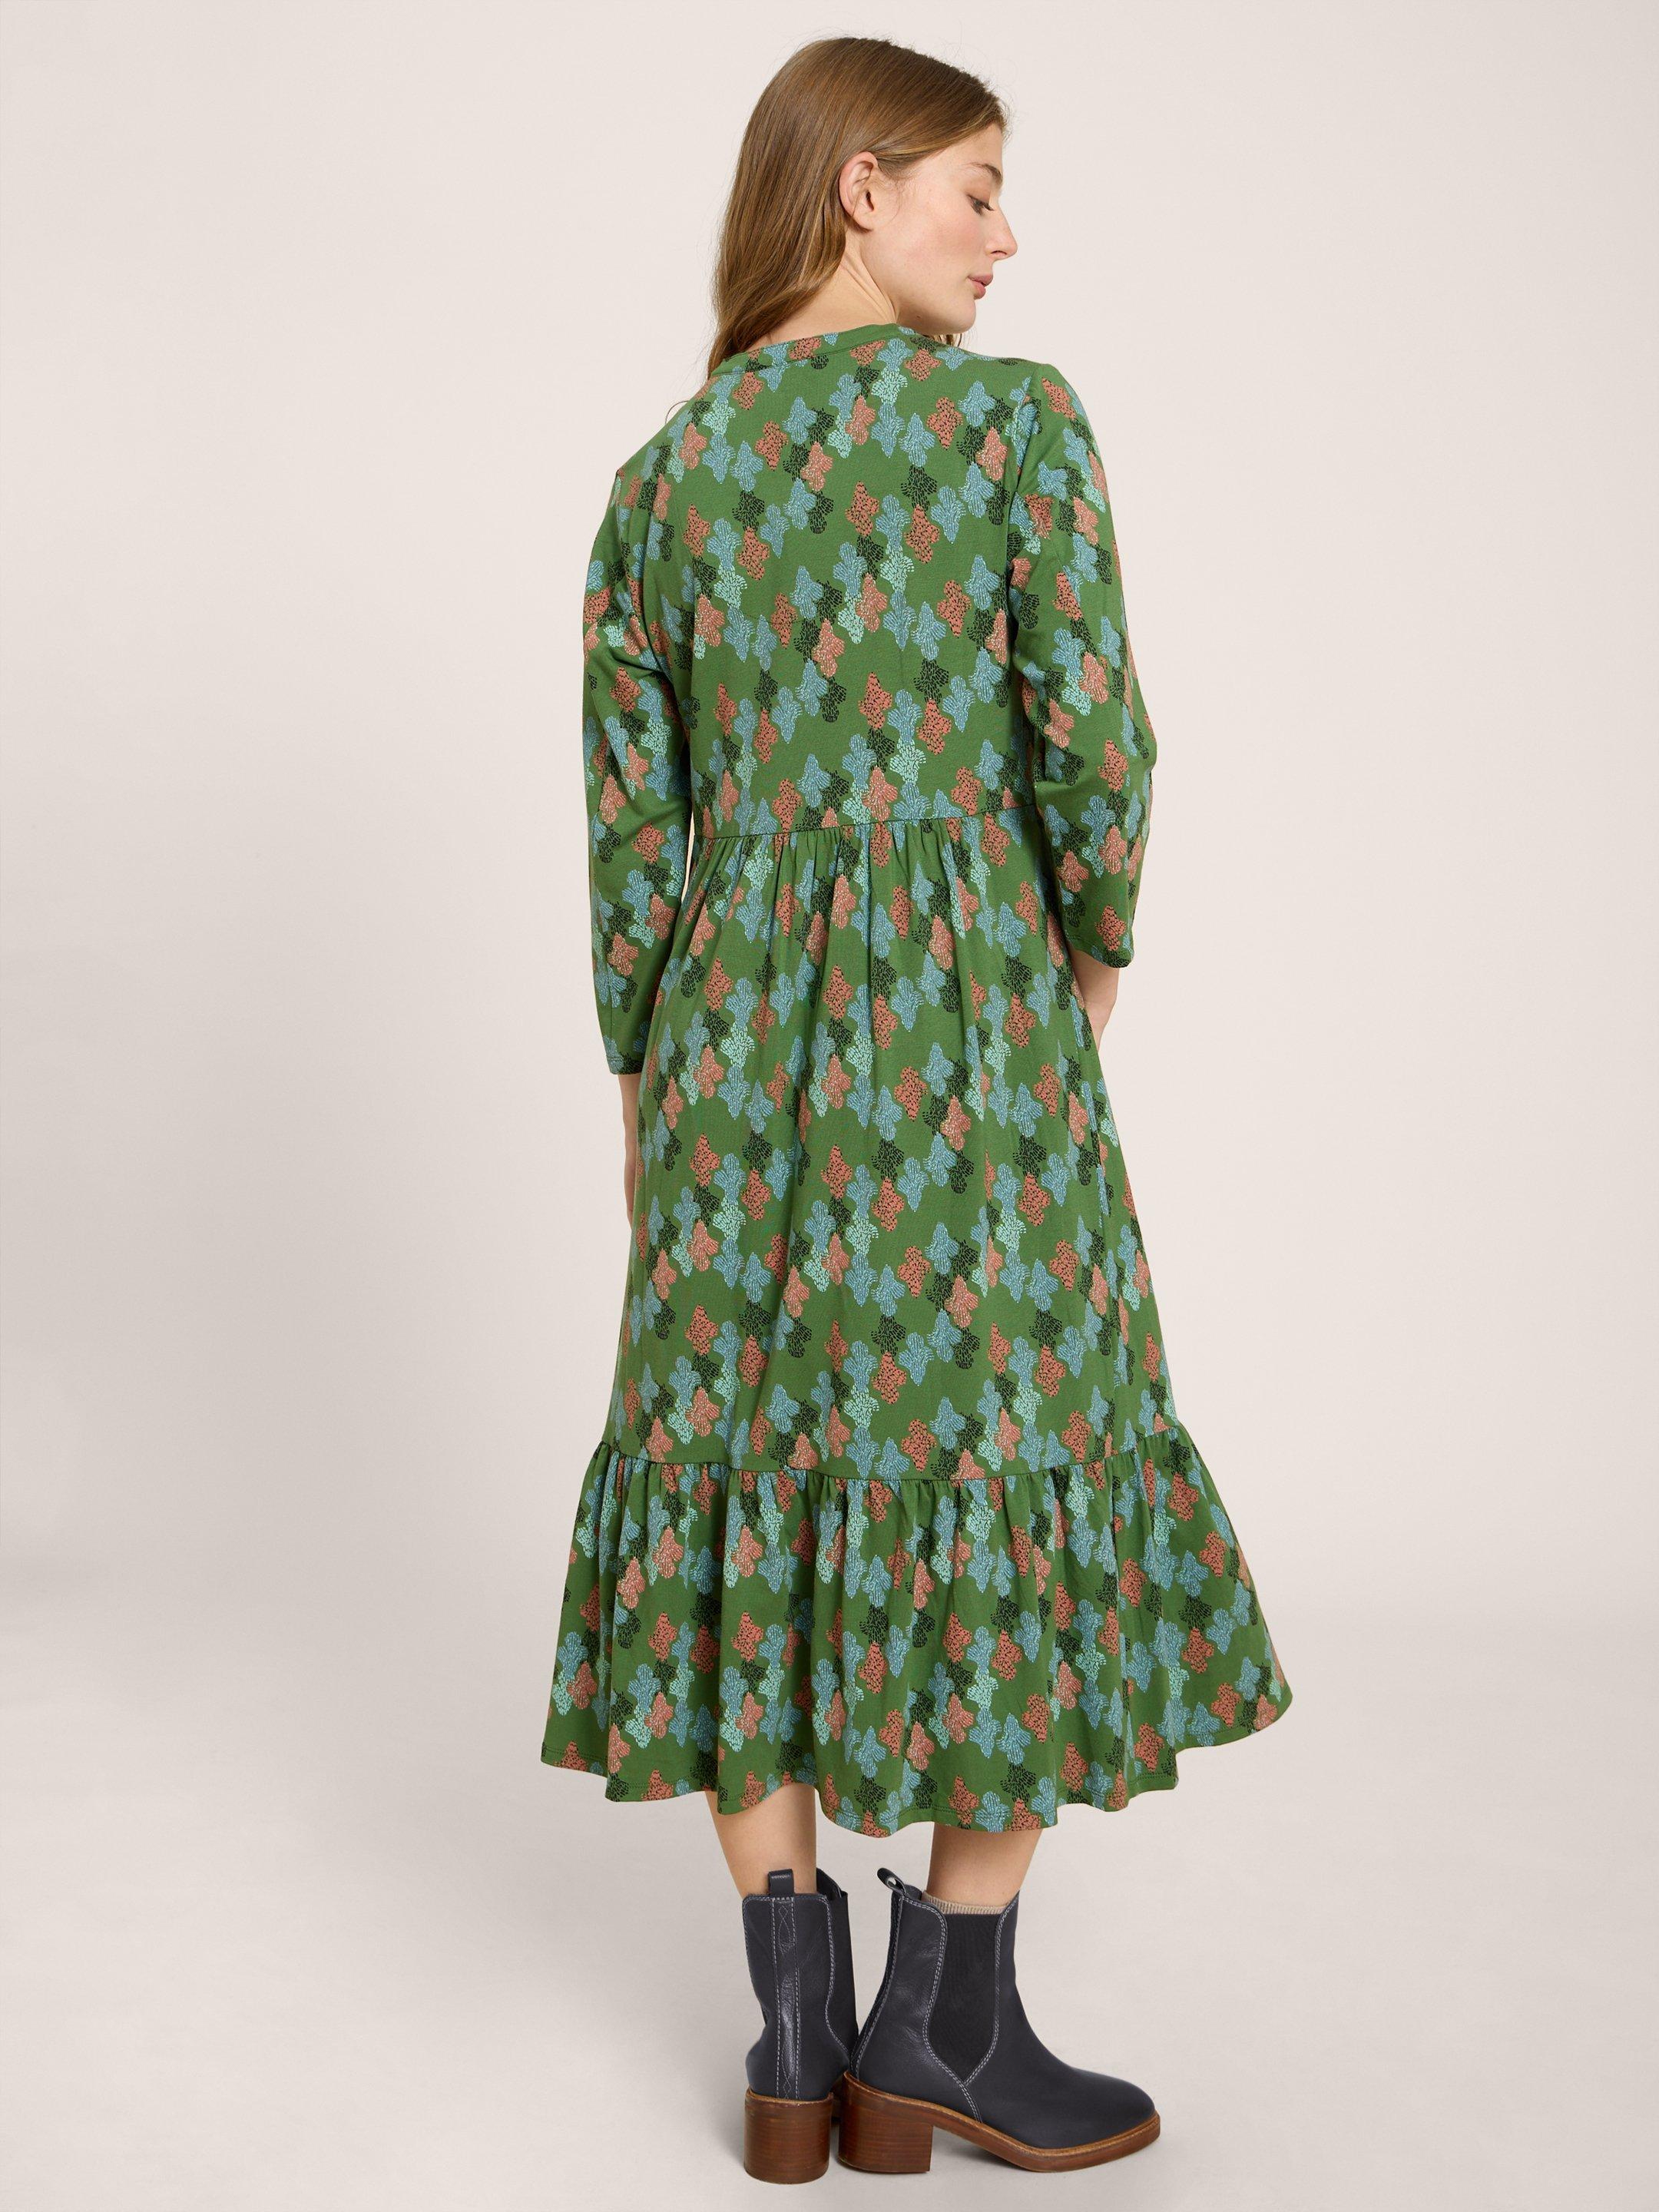 Naya Printed Jersey Dress in GREEN PR - MODEL BACK